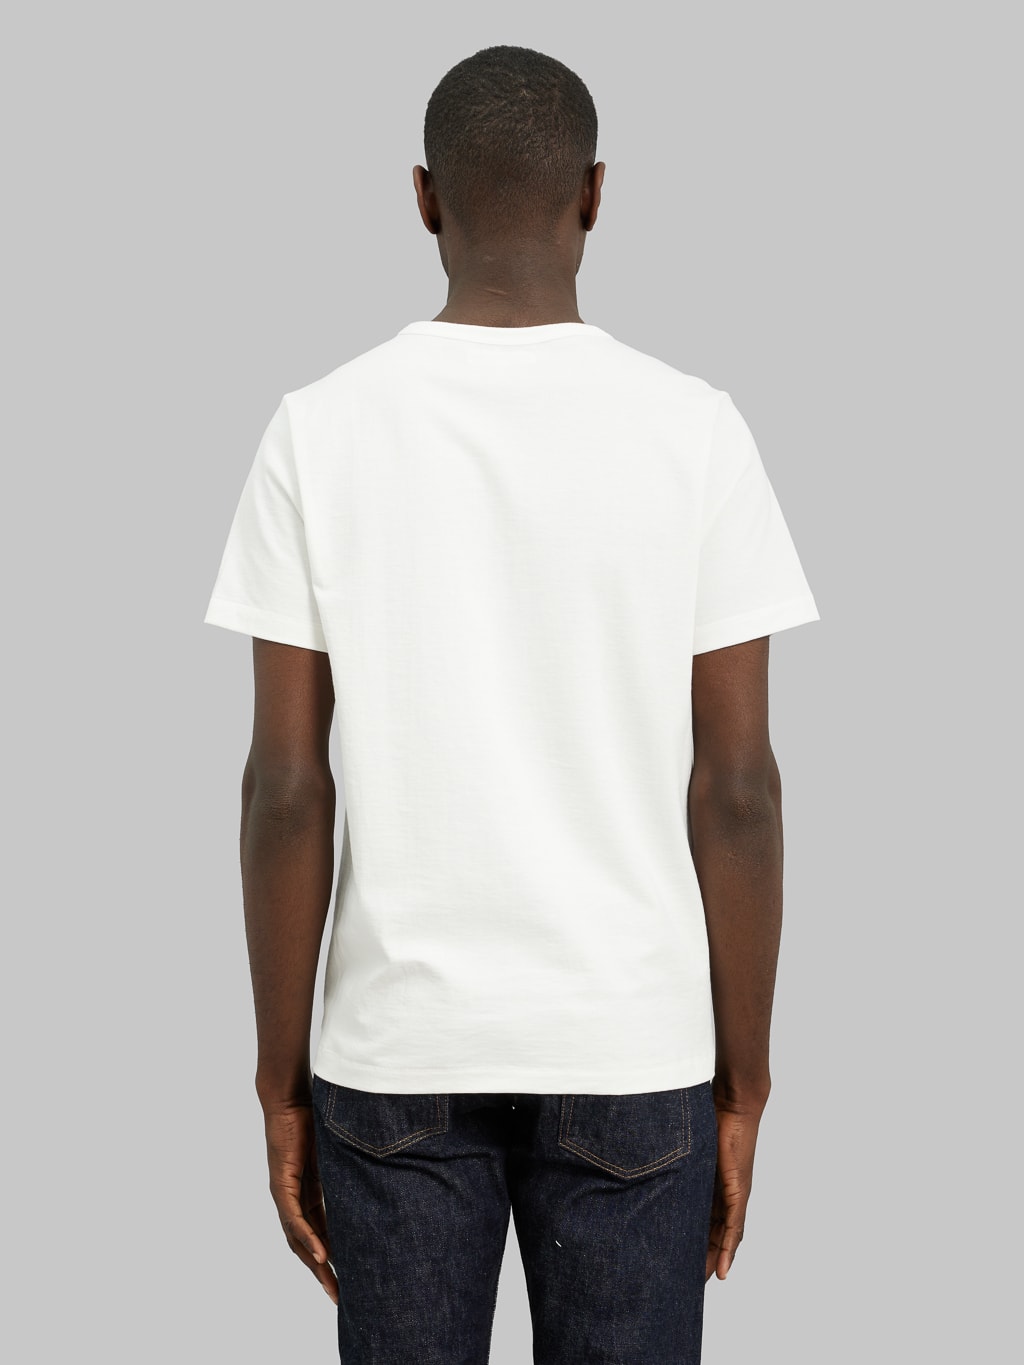 merz b schwanen good originals loopwheeled Tshirt classic white back fit